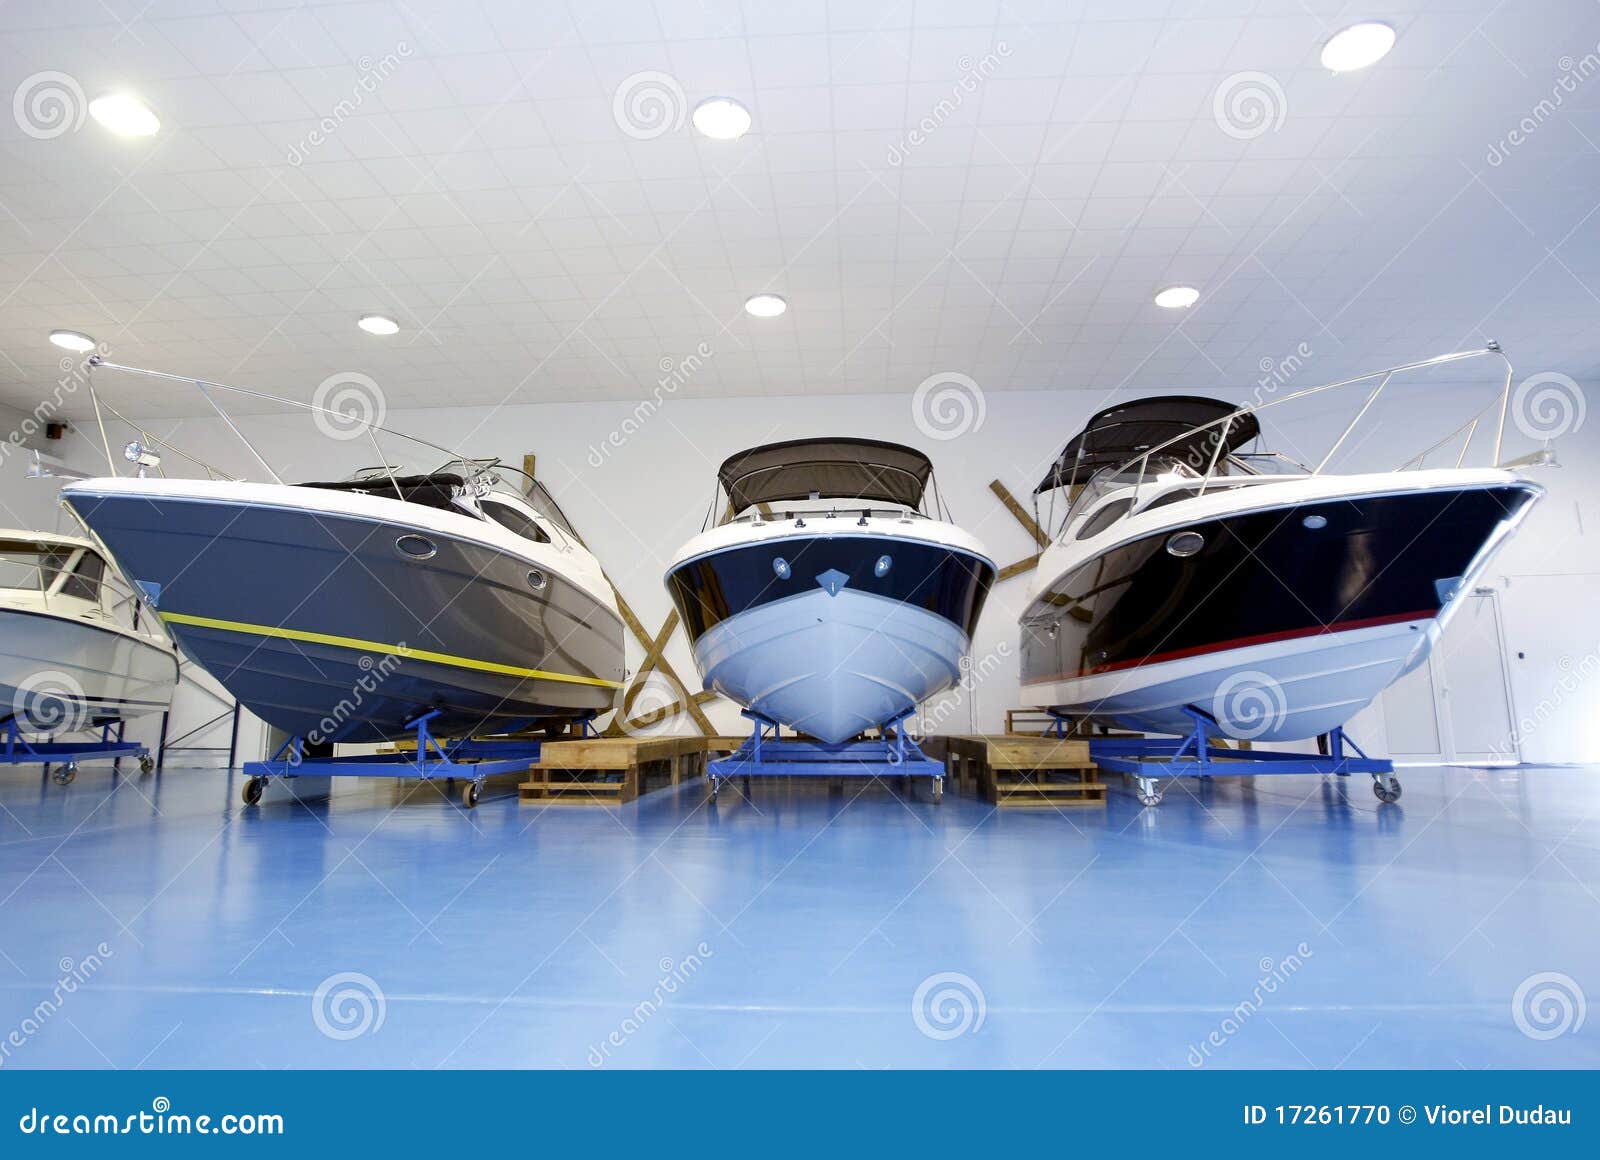 motor boats in showroom or garage